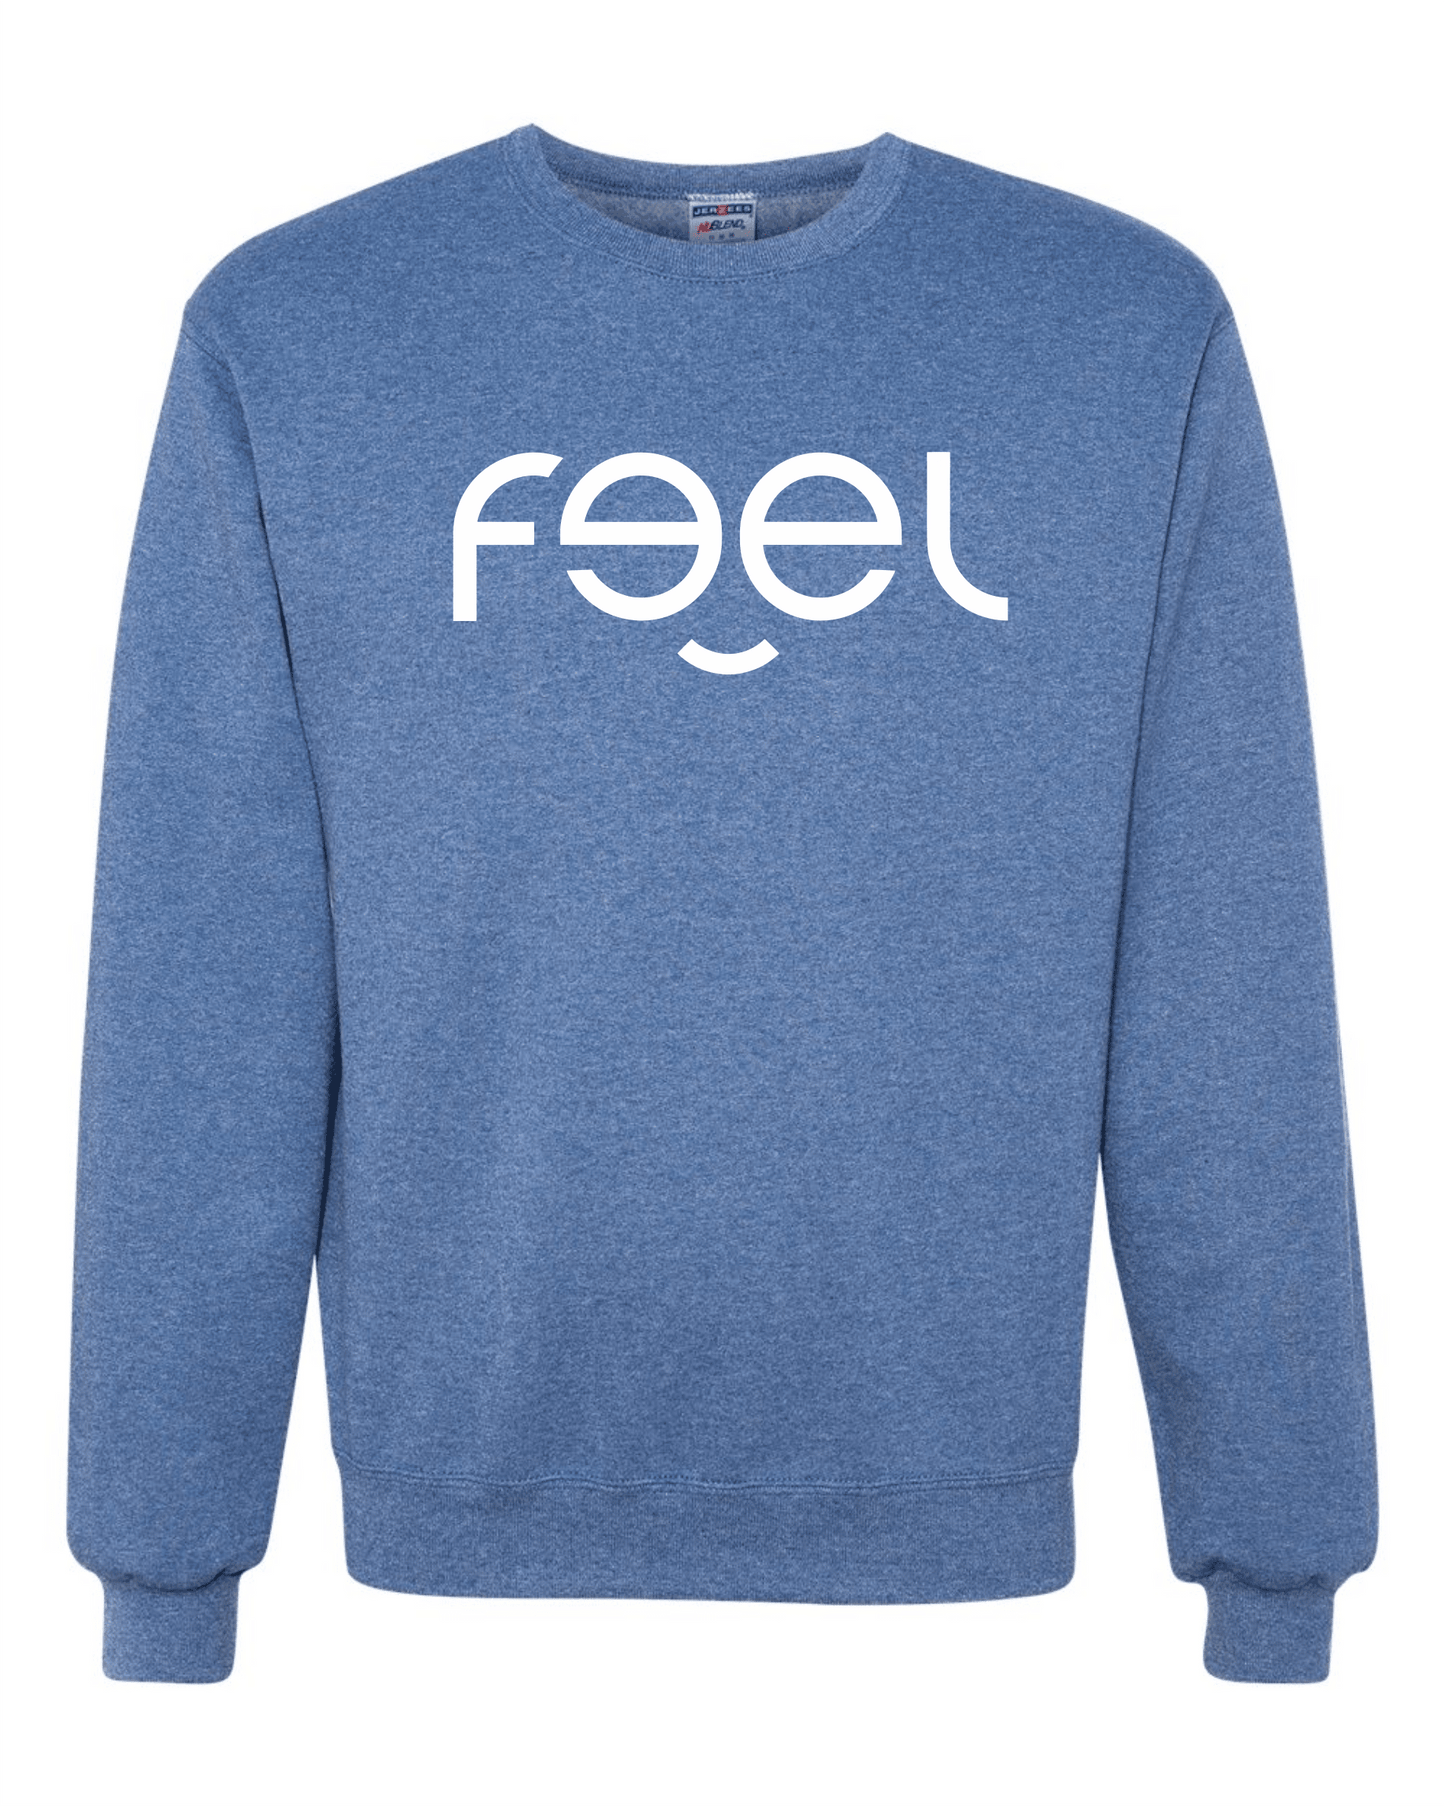 Feel Crewneck Sweater